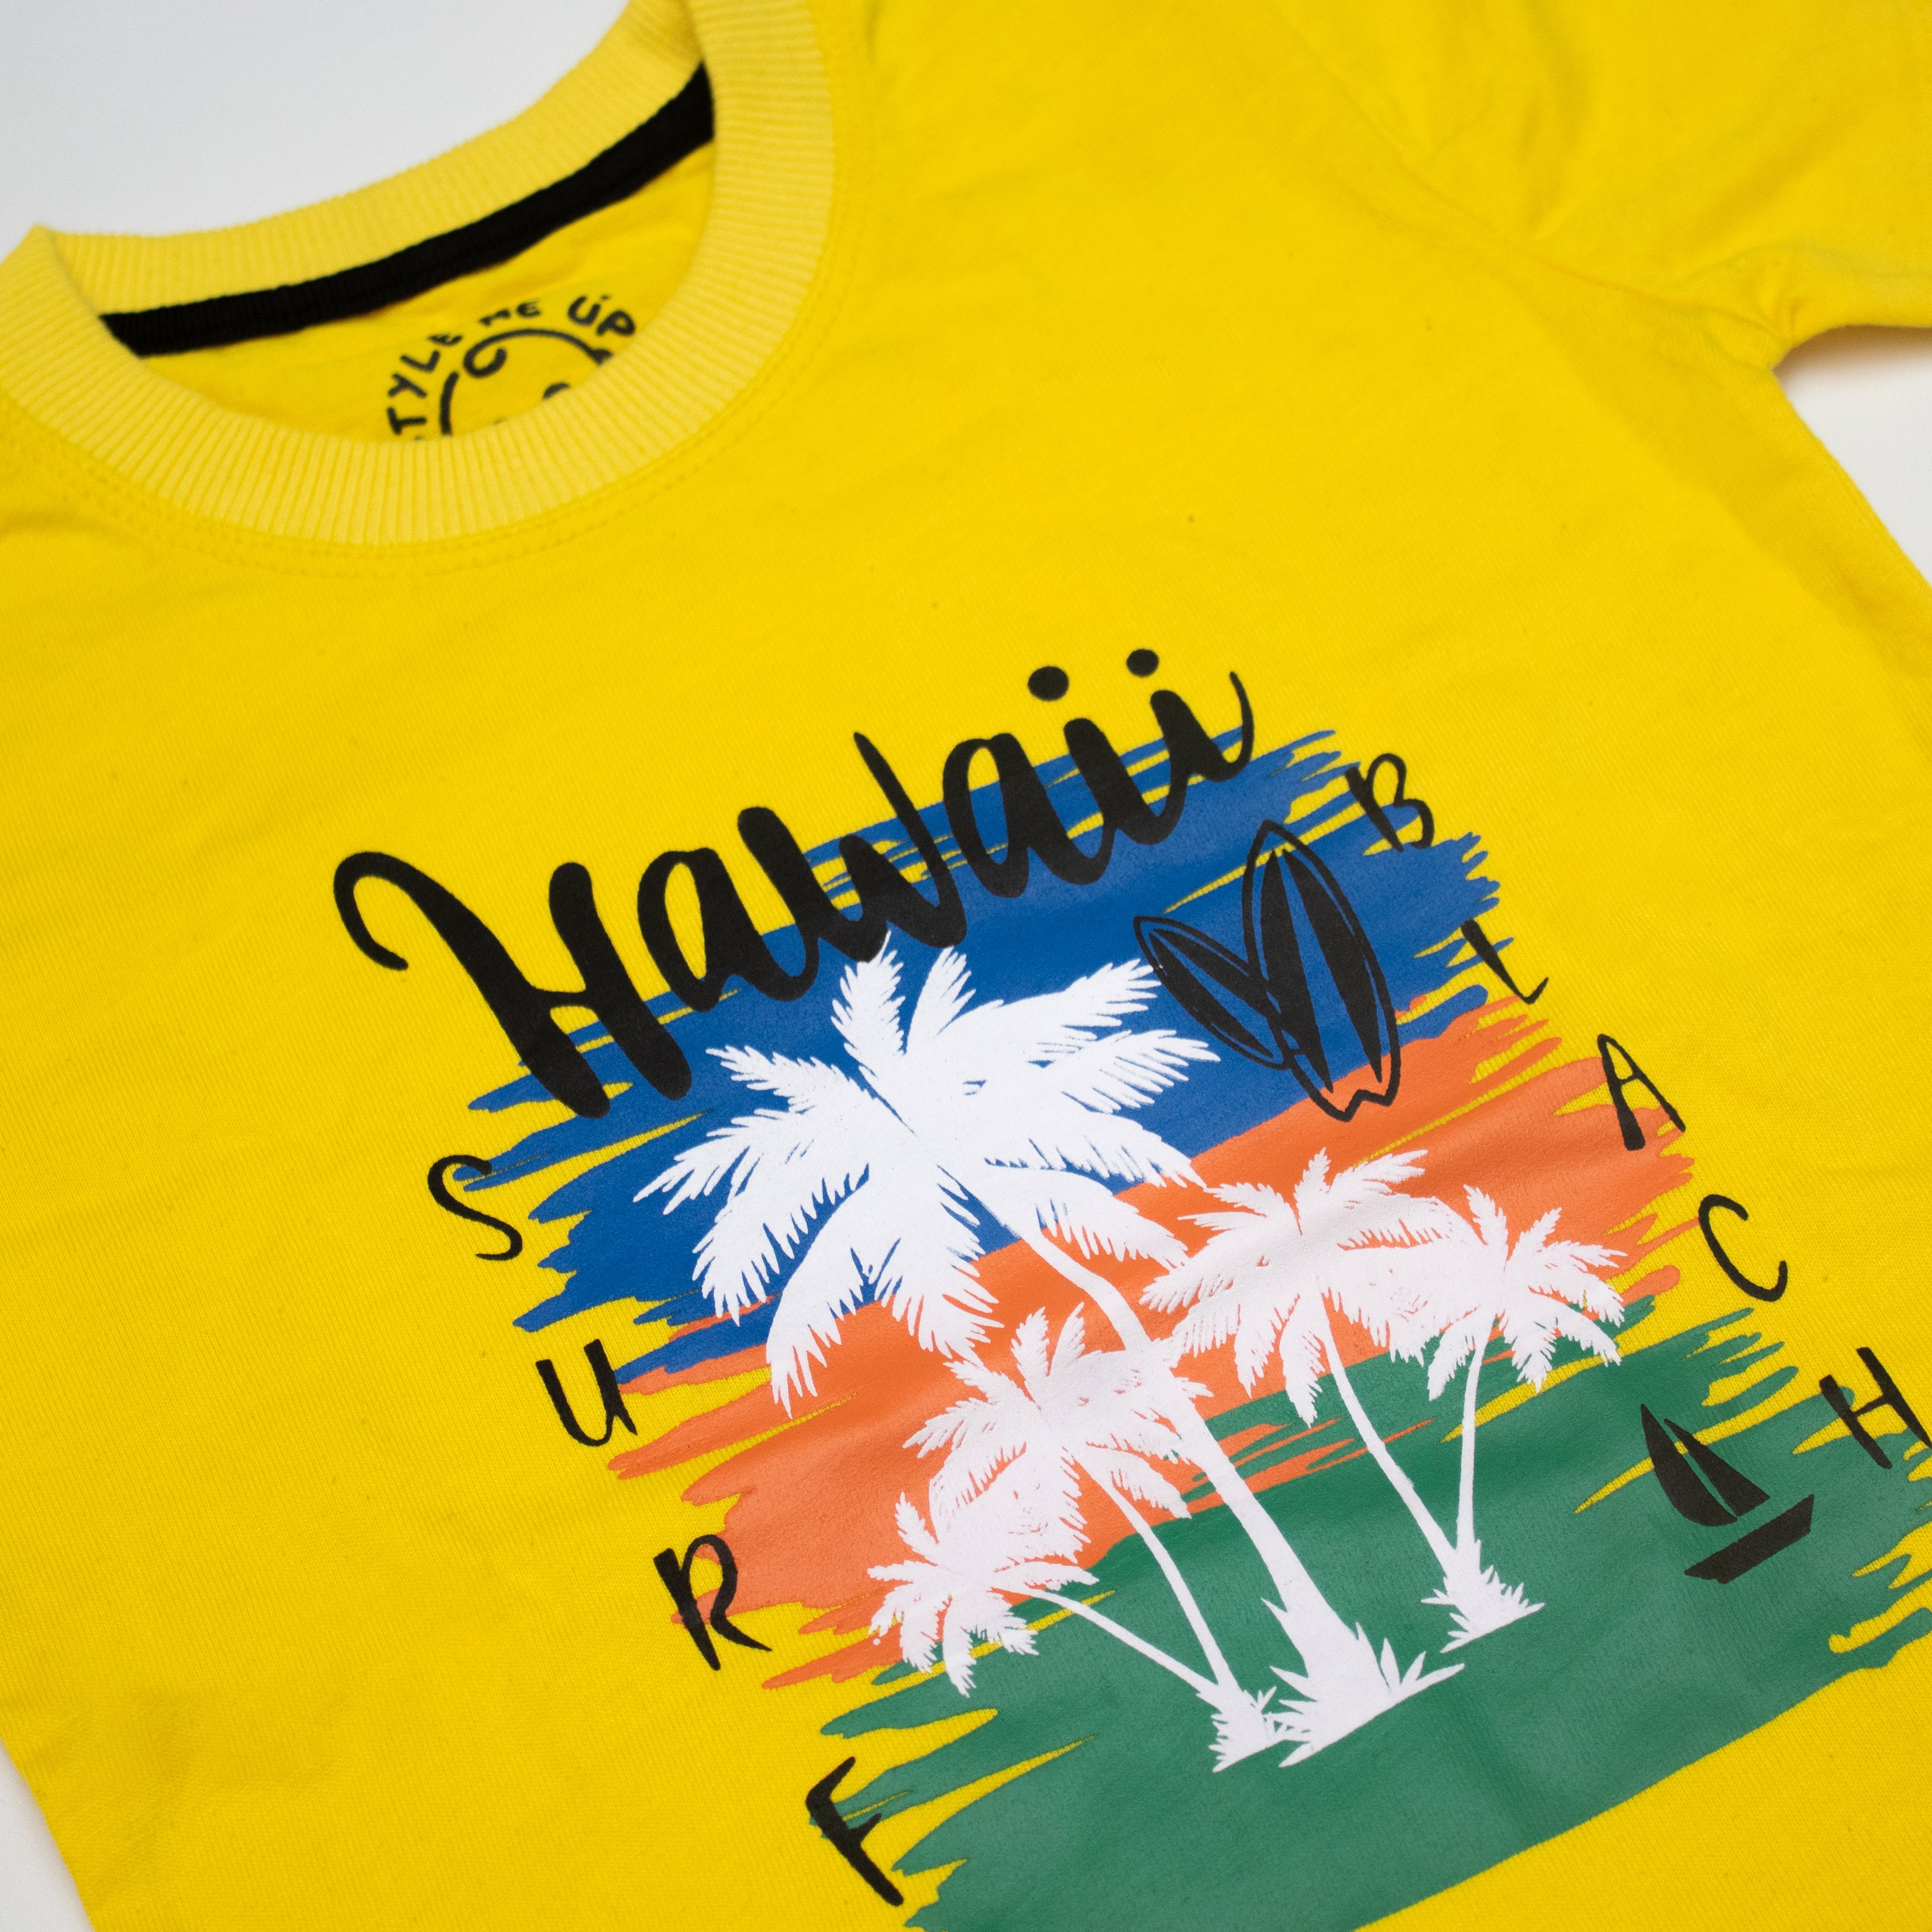 Hawaii Printed Yellow T-Shirt And Shorts For Kids